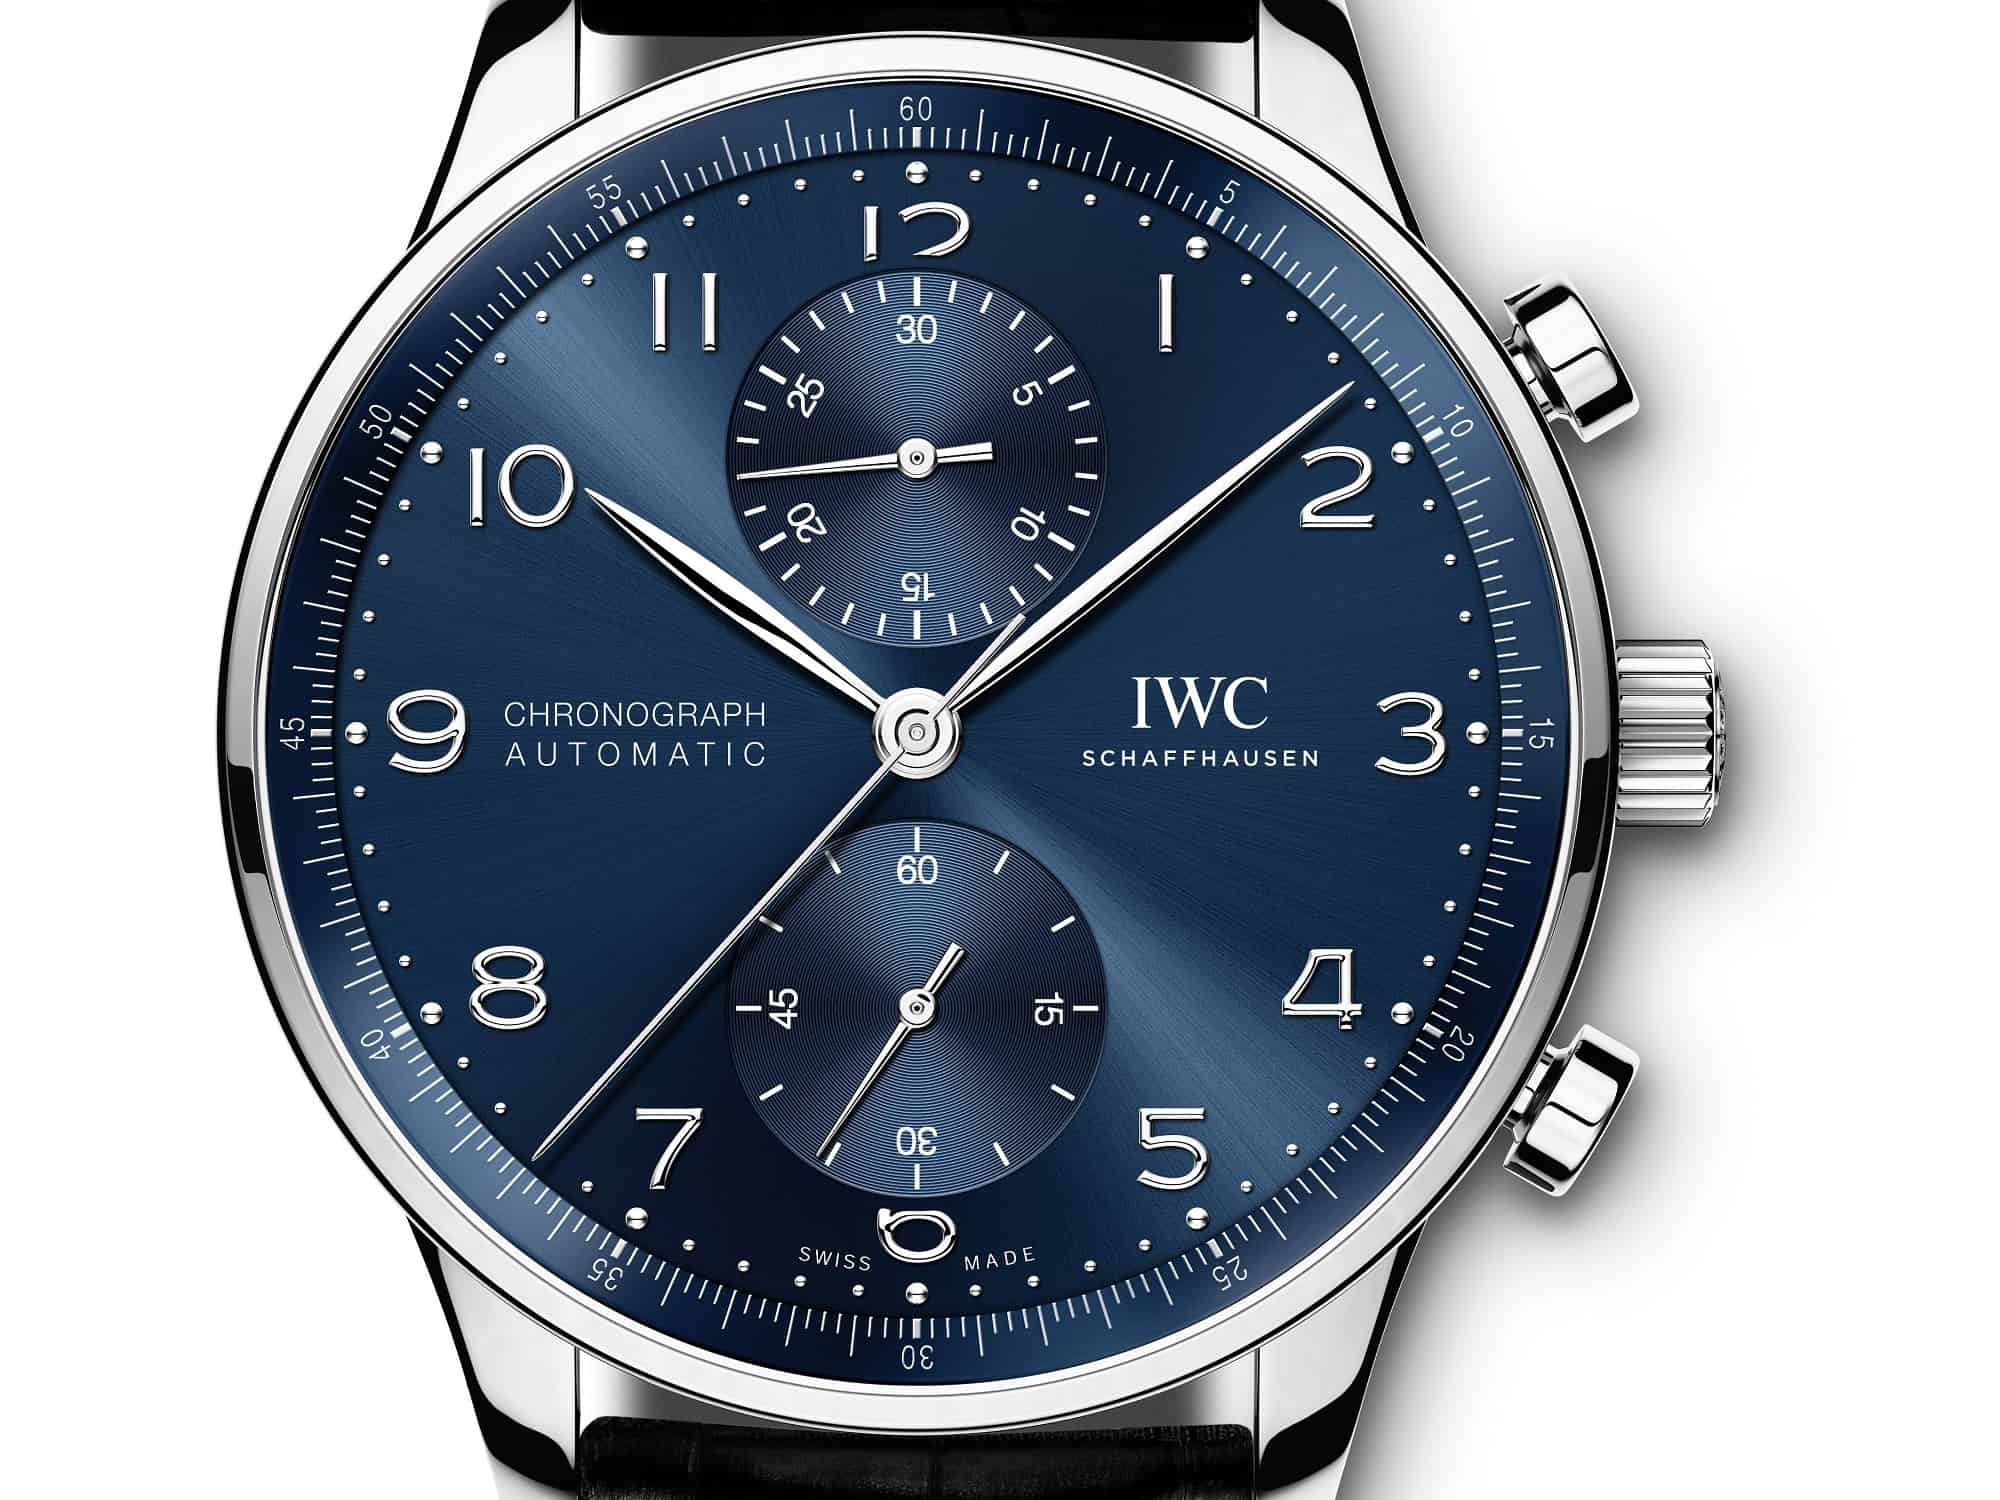 IWC Chronograph mit blauem Zifferblatt in Nahaufnahme